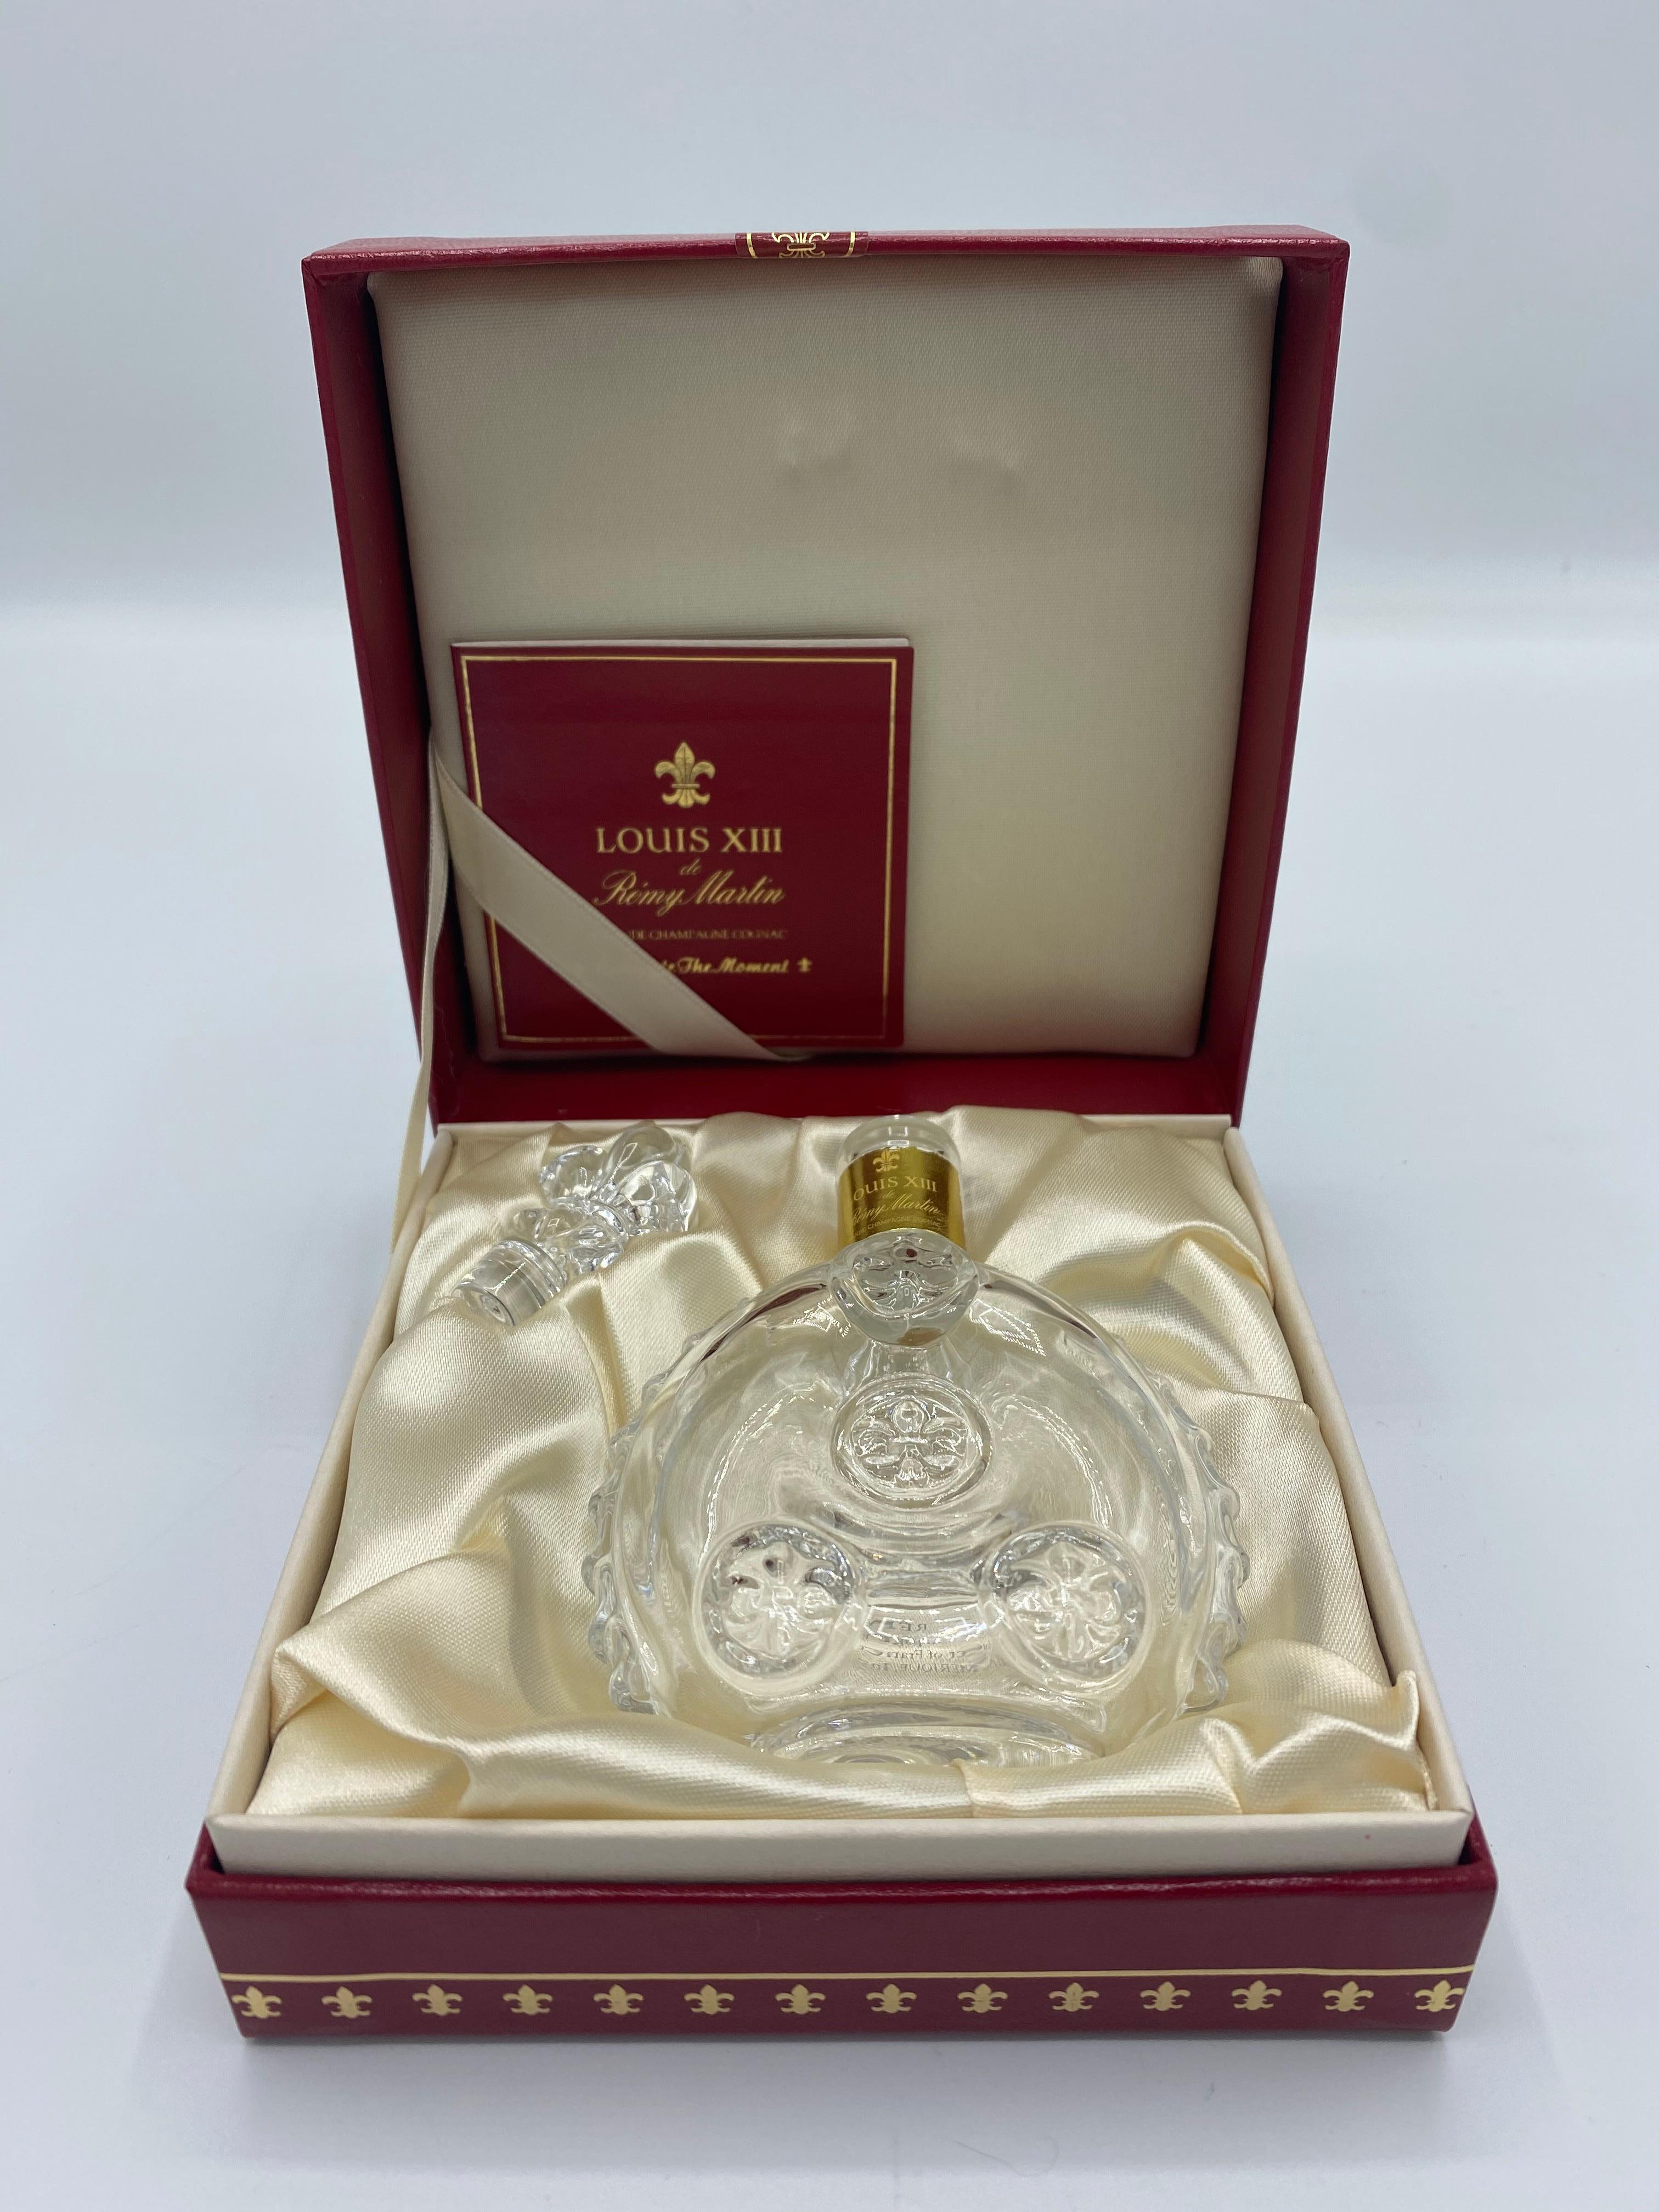 Women's or Men's Vintage Baccarat Crystal Louis XIII Remy Martin Cognac Liquor Decanter Set, 50ml